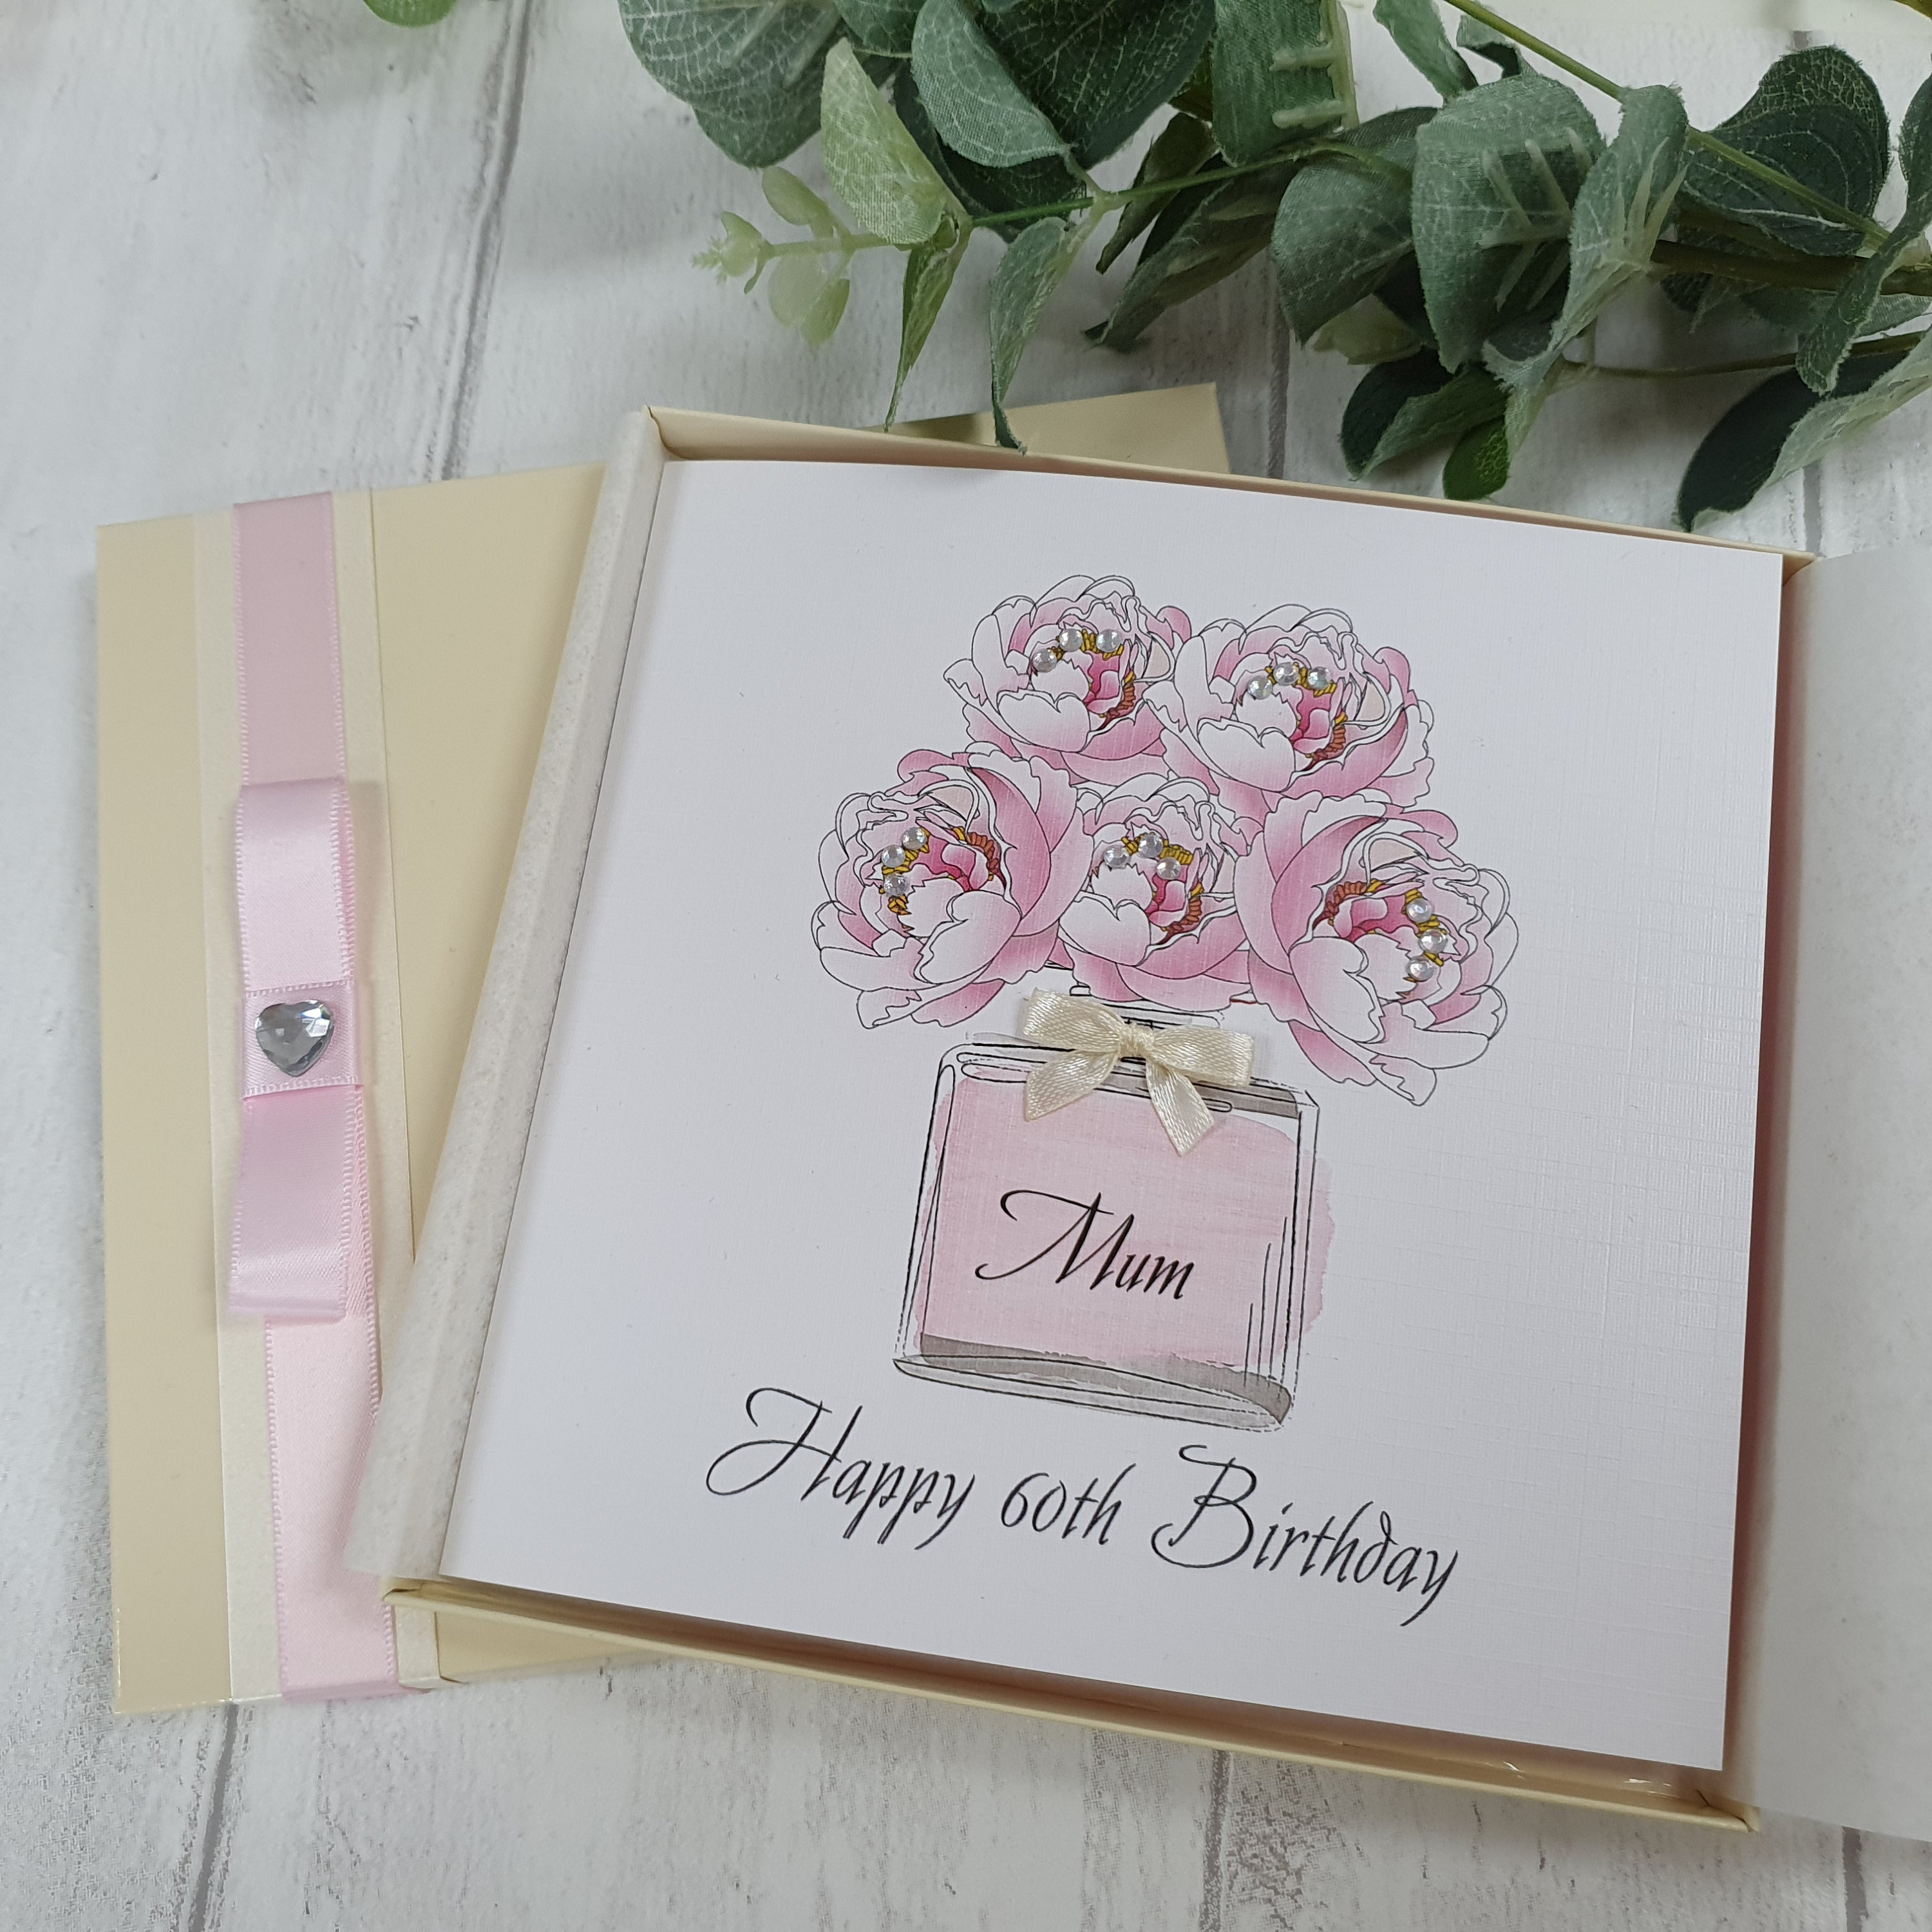 Custom Made Birthday Cards - Printable Templates Free